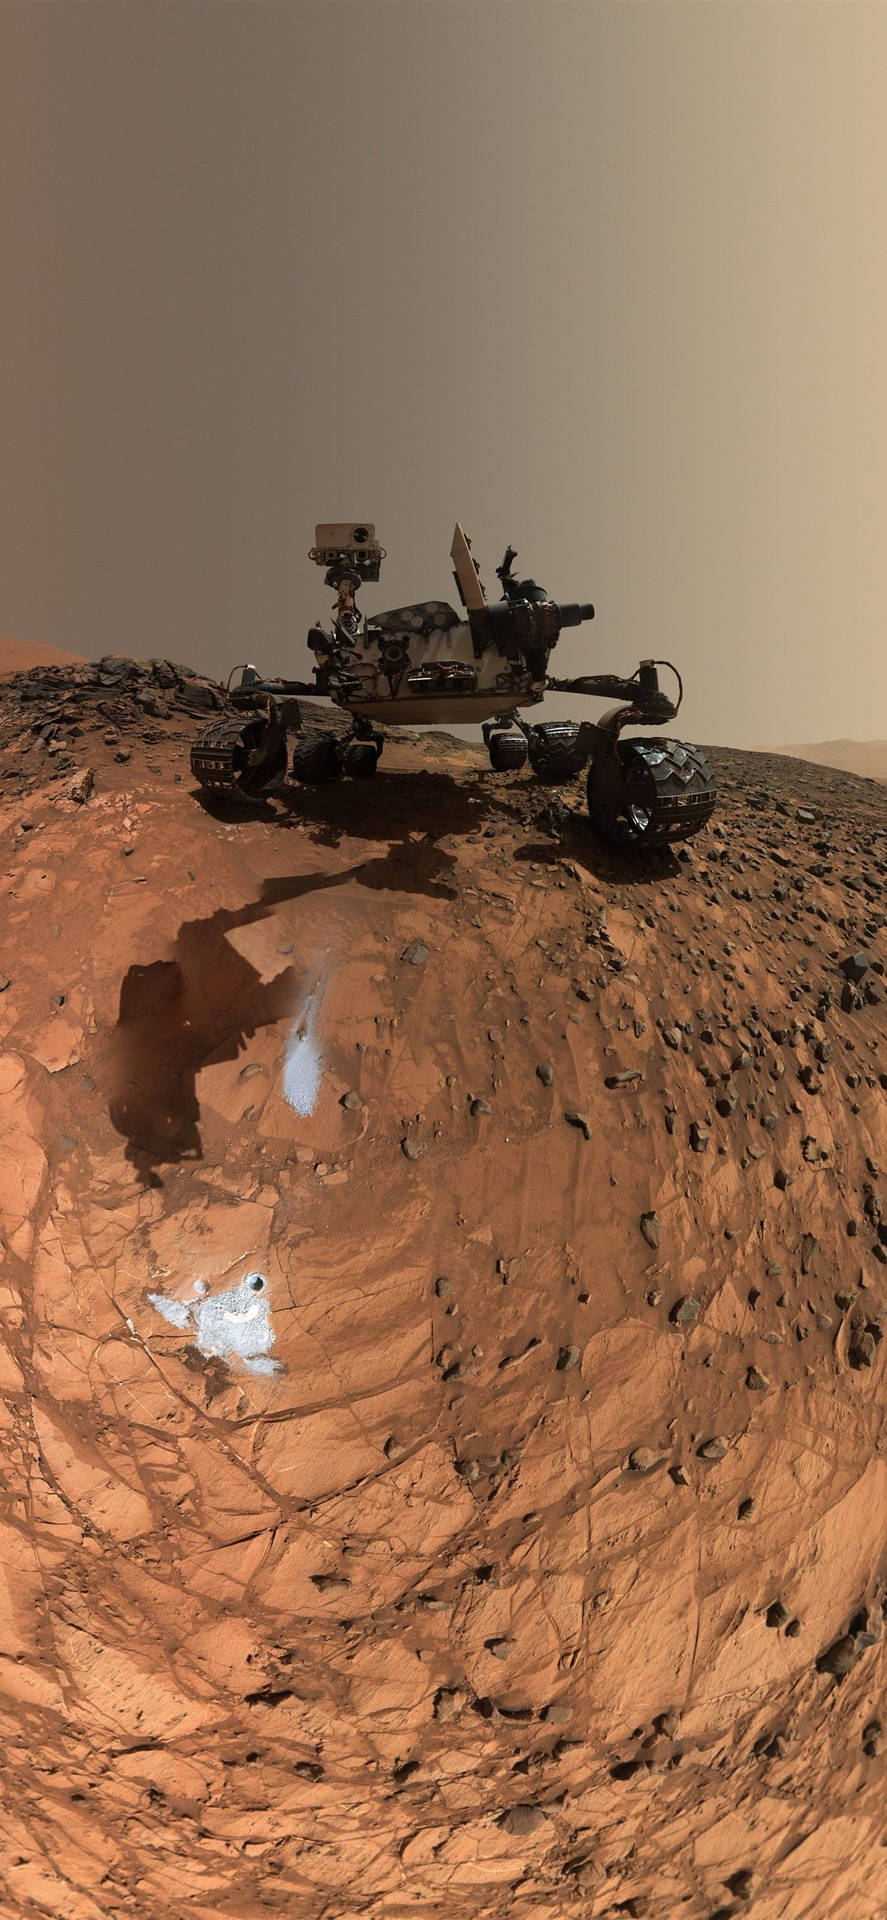 NASA Android Curiosity Wallpaper: Få det klassiske NASA Curiosity Rover-baggrundsdesign til din Androids skærm. Wallpaper